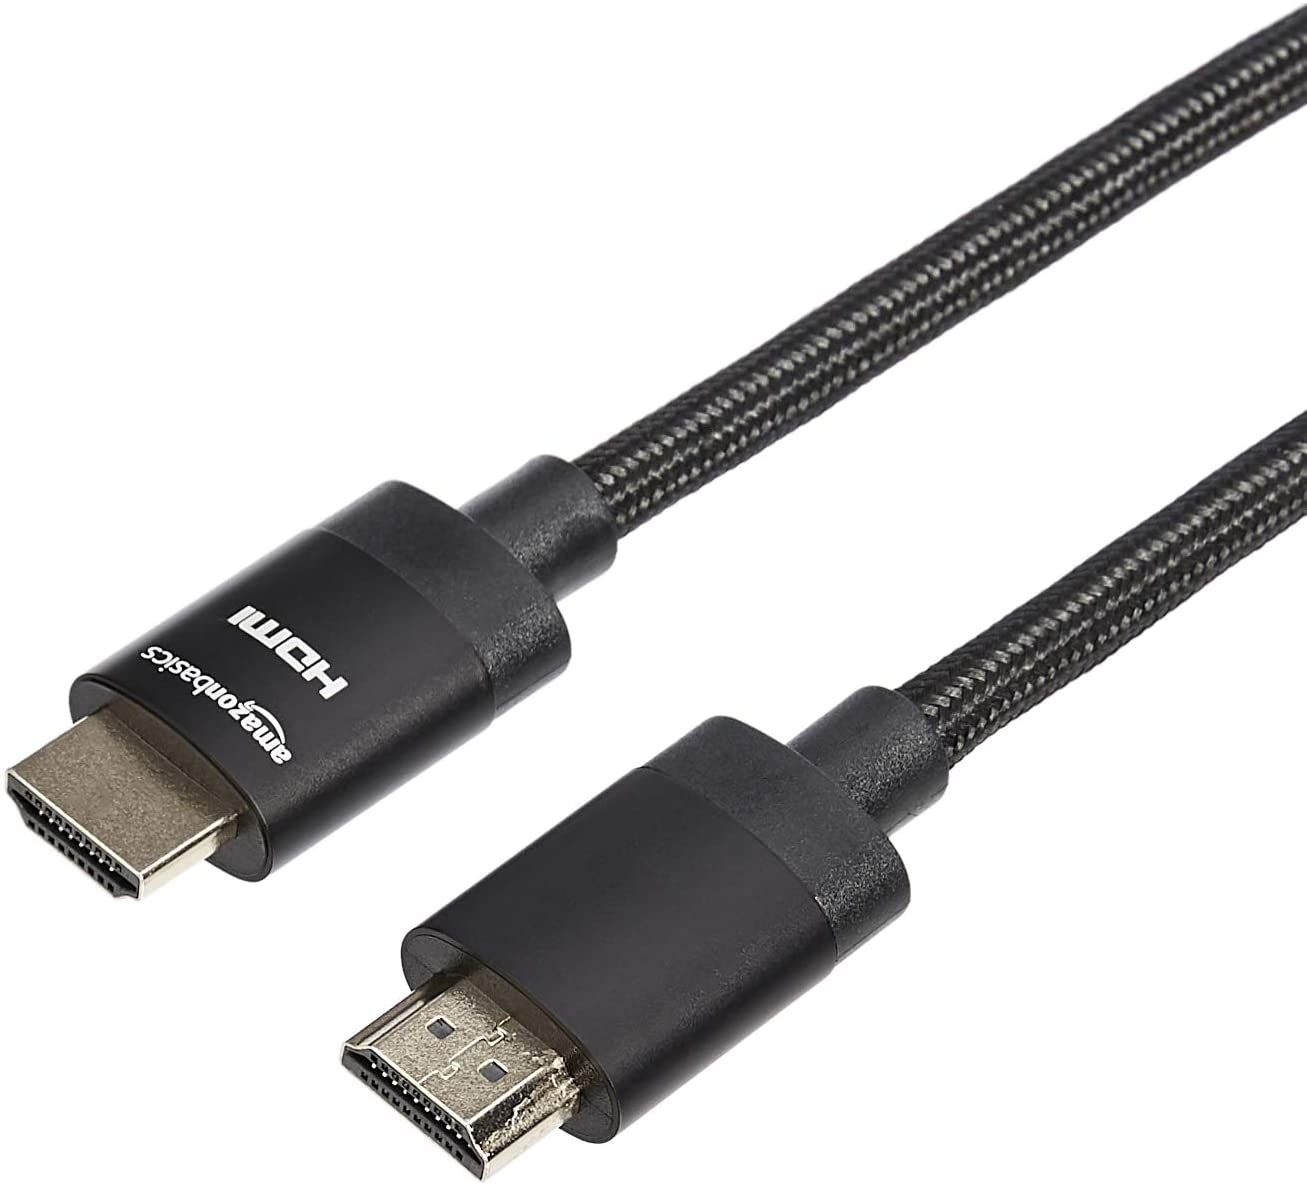 Amazon Basics Premium-Certified Braided HDMI Cable